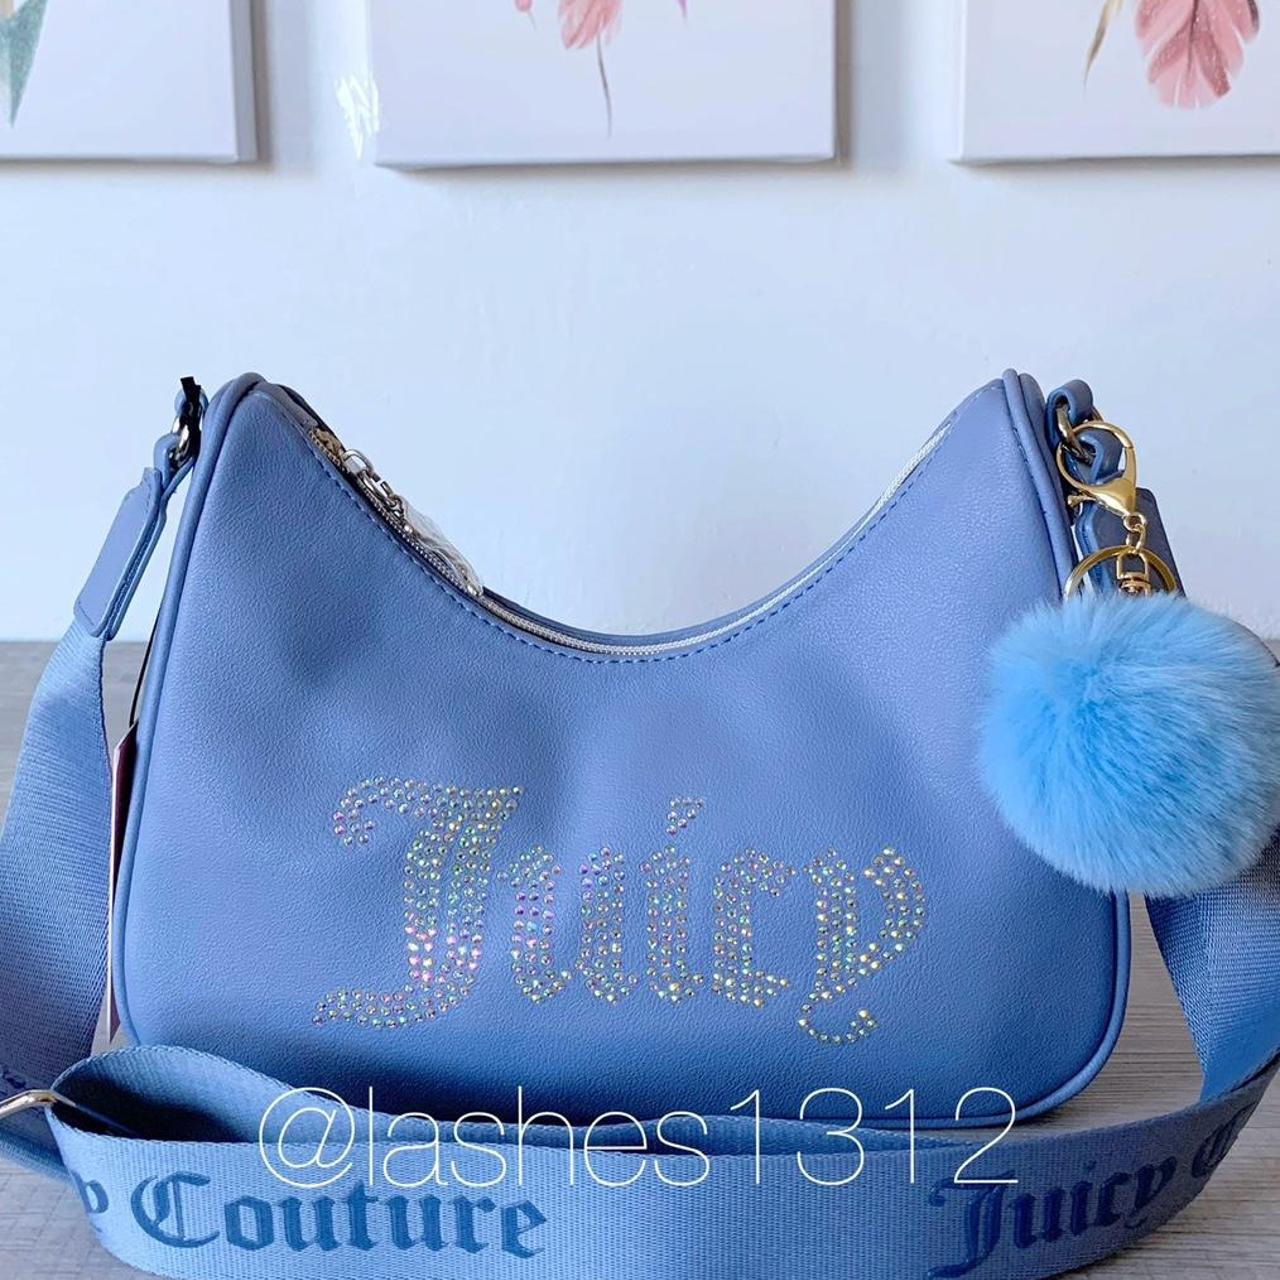 Vintage Super Rare Juicy Couture Purse Bag Blue Cherry Print Handbag | eBay